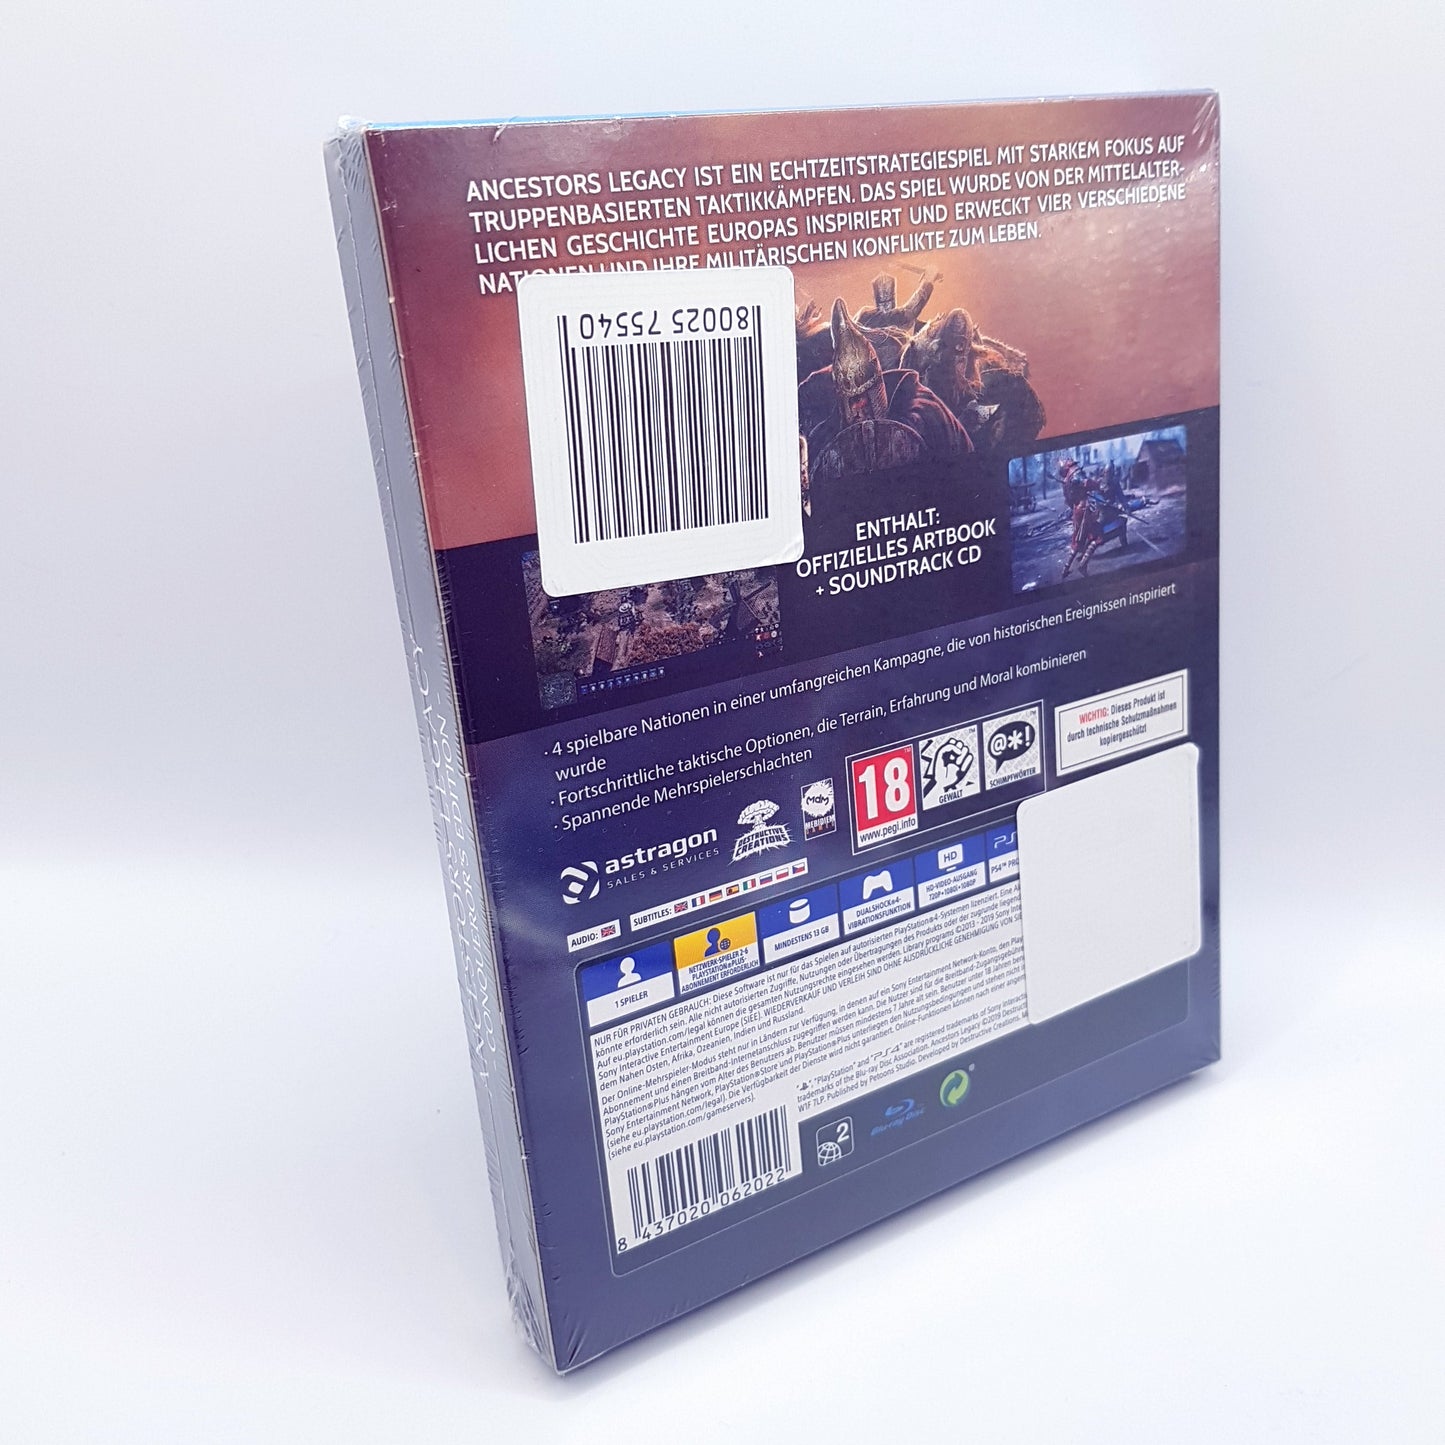 PS4 Playstation 4 - Ancestors Legacy - Conquer's Edition - NEU sealed